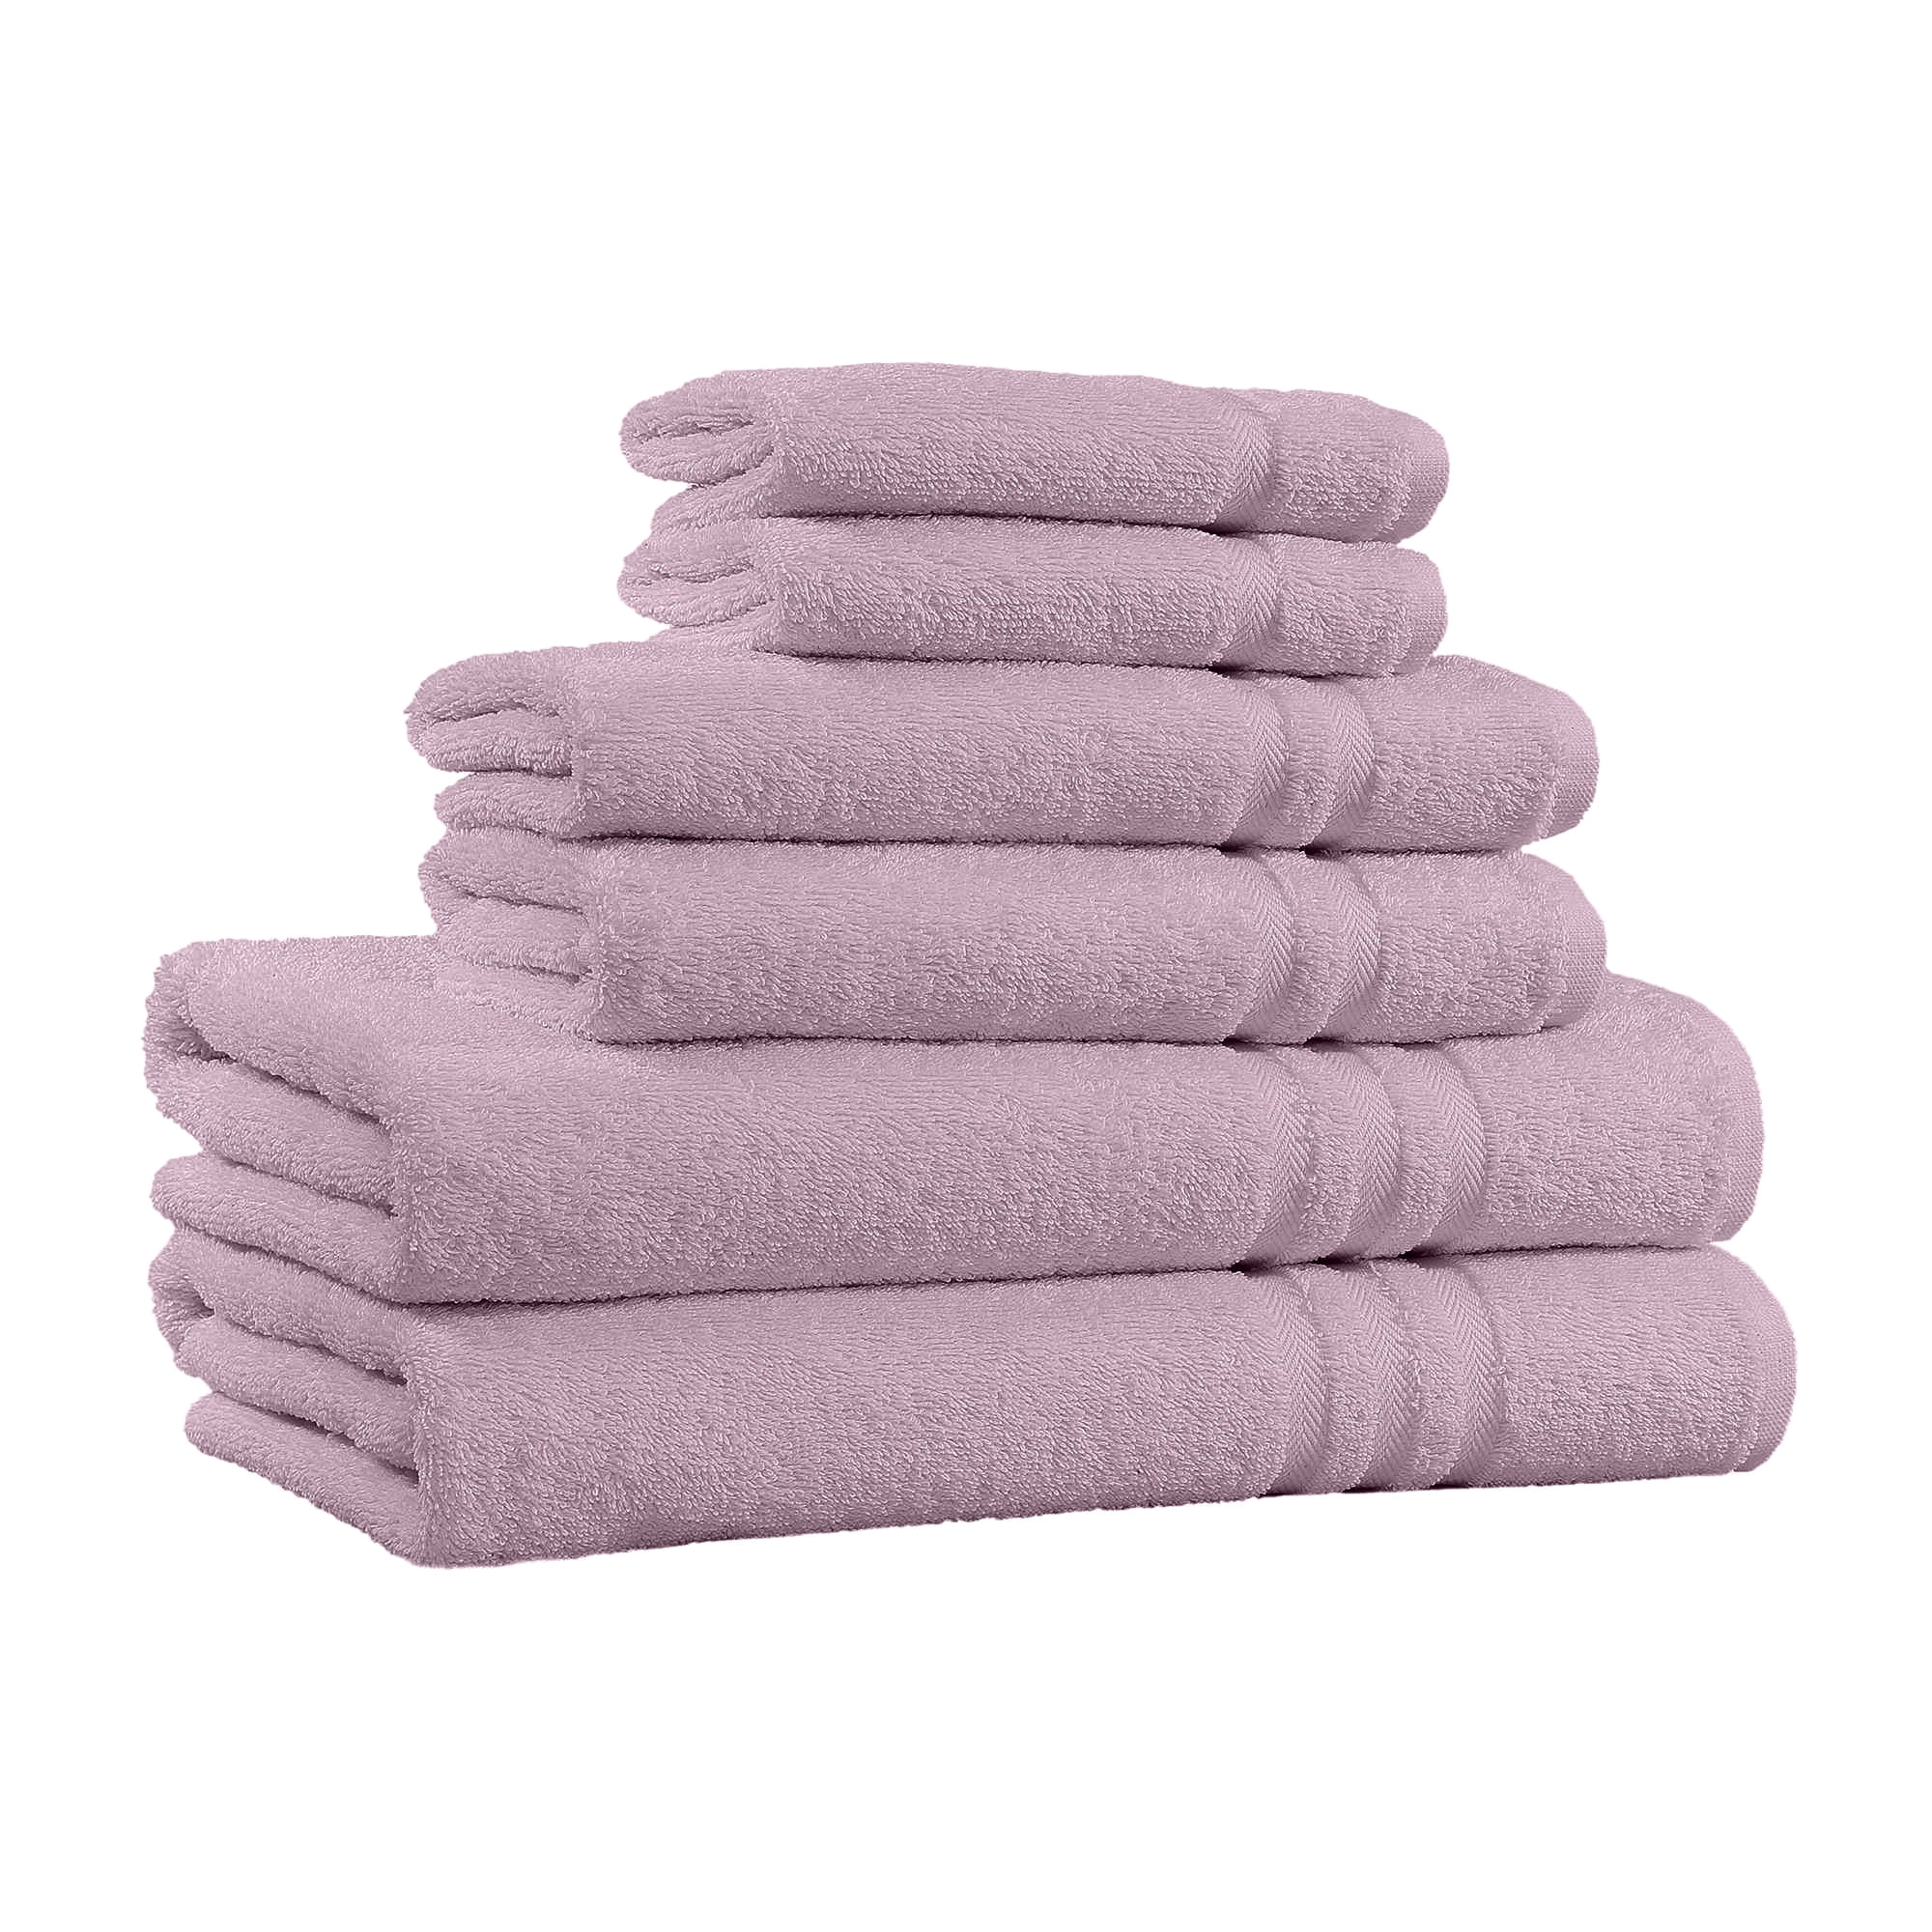 6 Piece Bath Towel Set for Bathroom Shower Spa Soft and Absorbent 